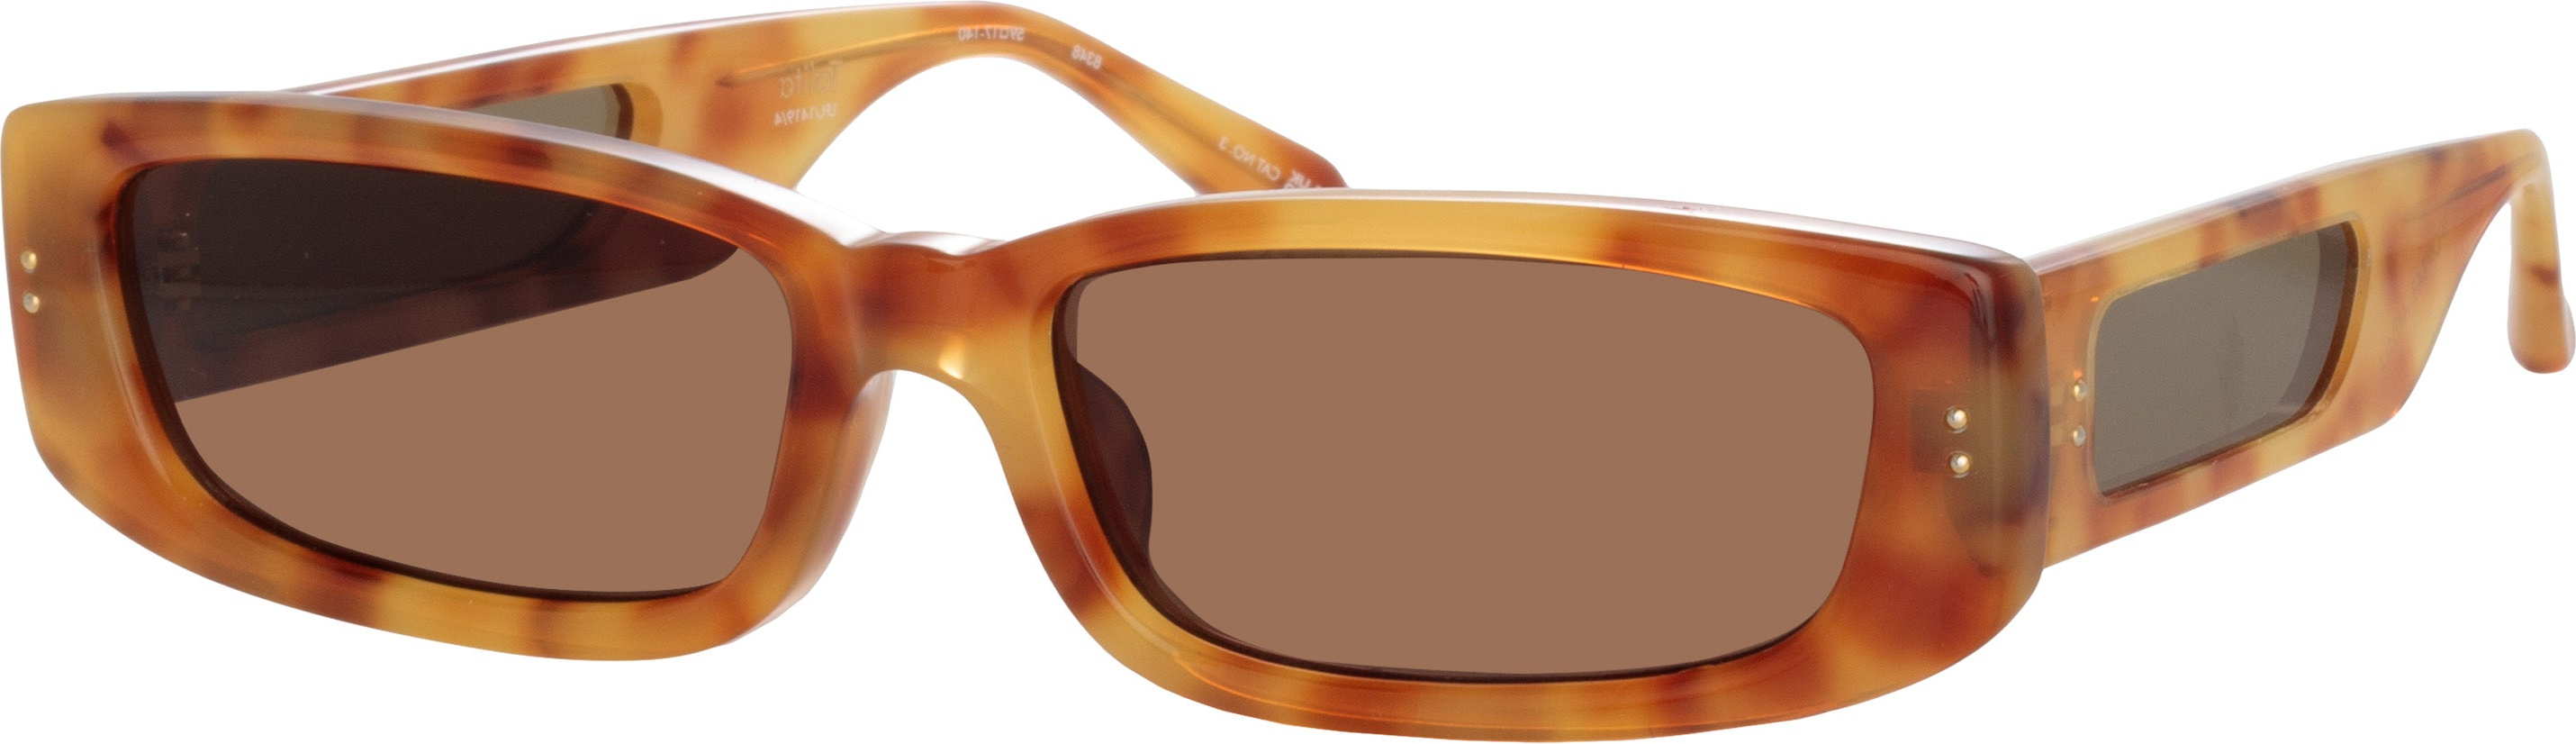 Color_LFL1419C4SUN - Talita Rectangular Sunglasses in Saffron Tortoiseshell